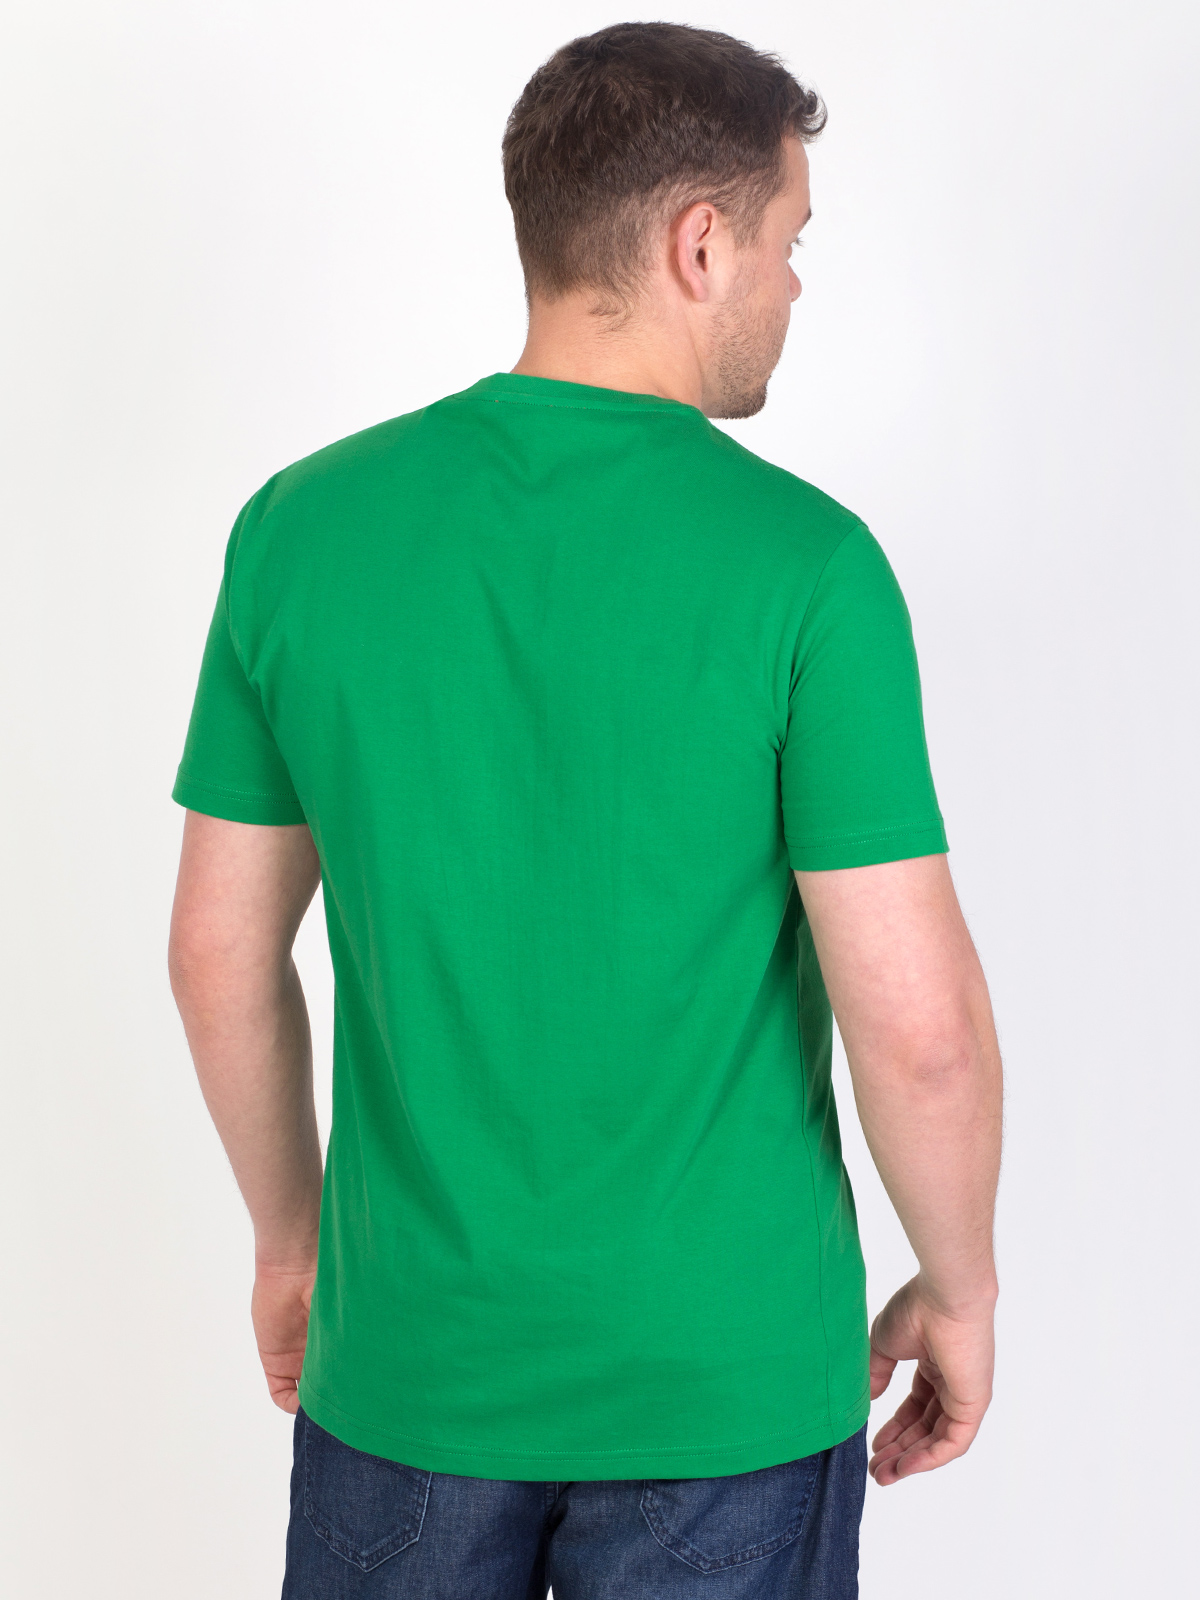 Green tshirt with brooklyn print - 96430 € 16.31 img4